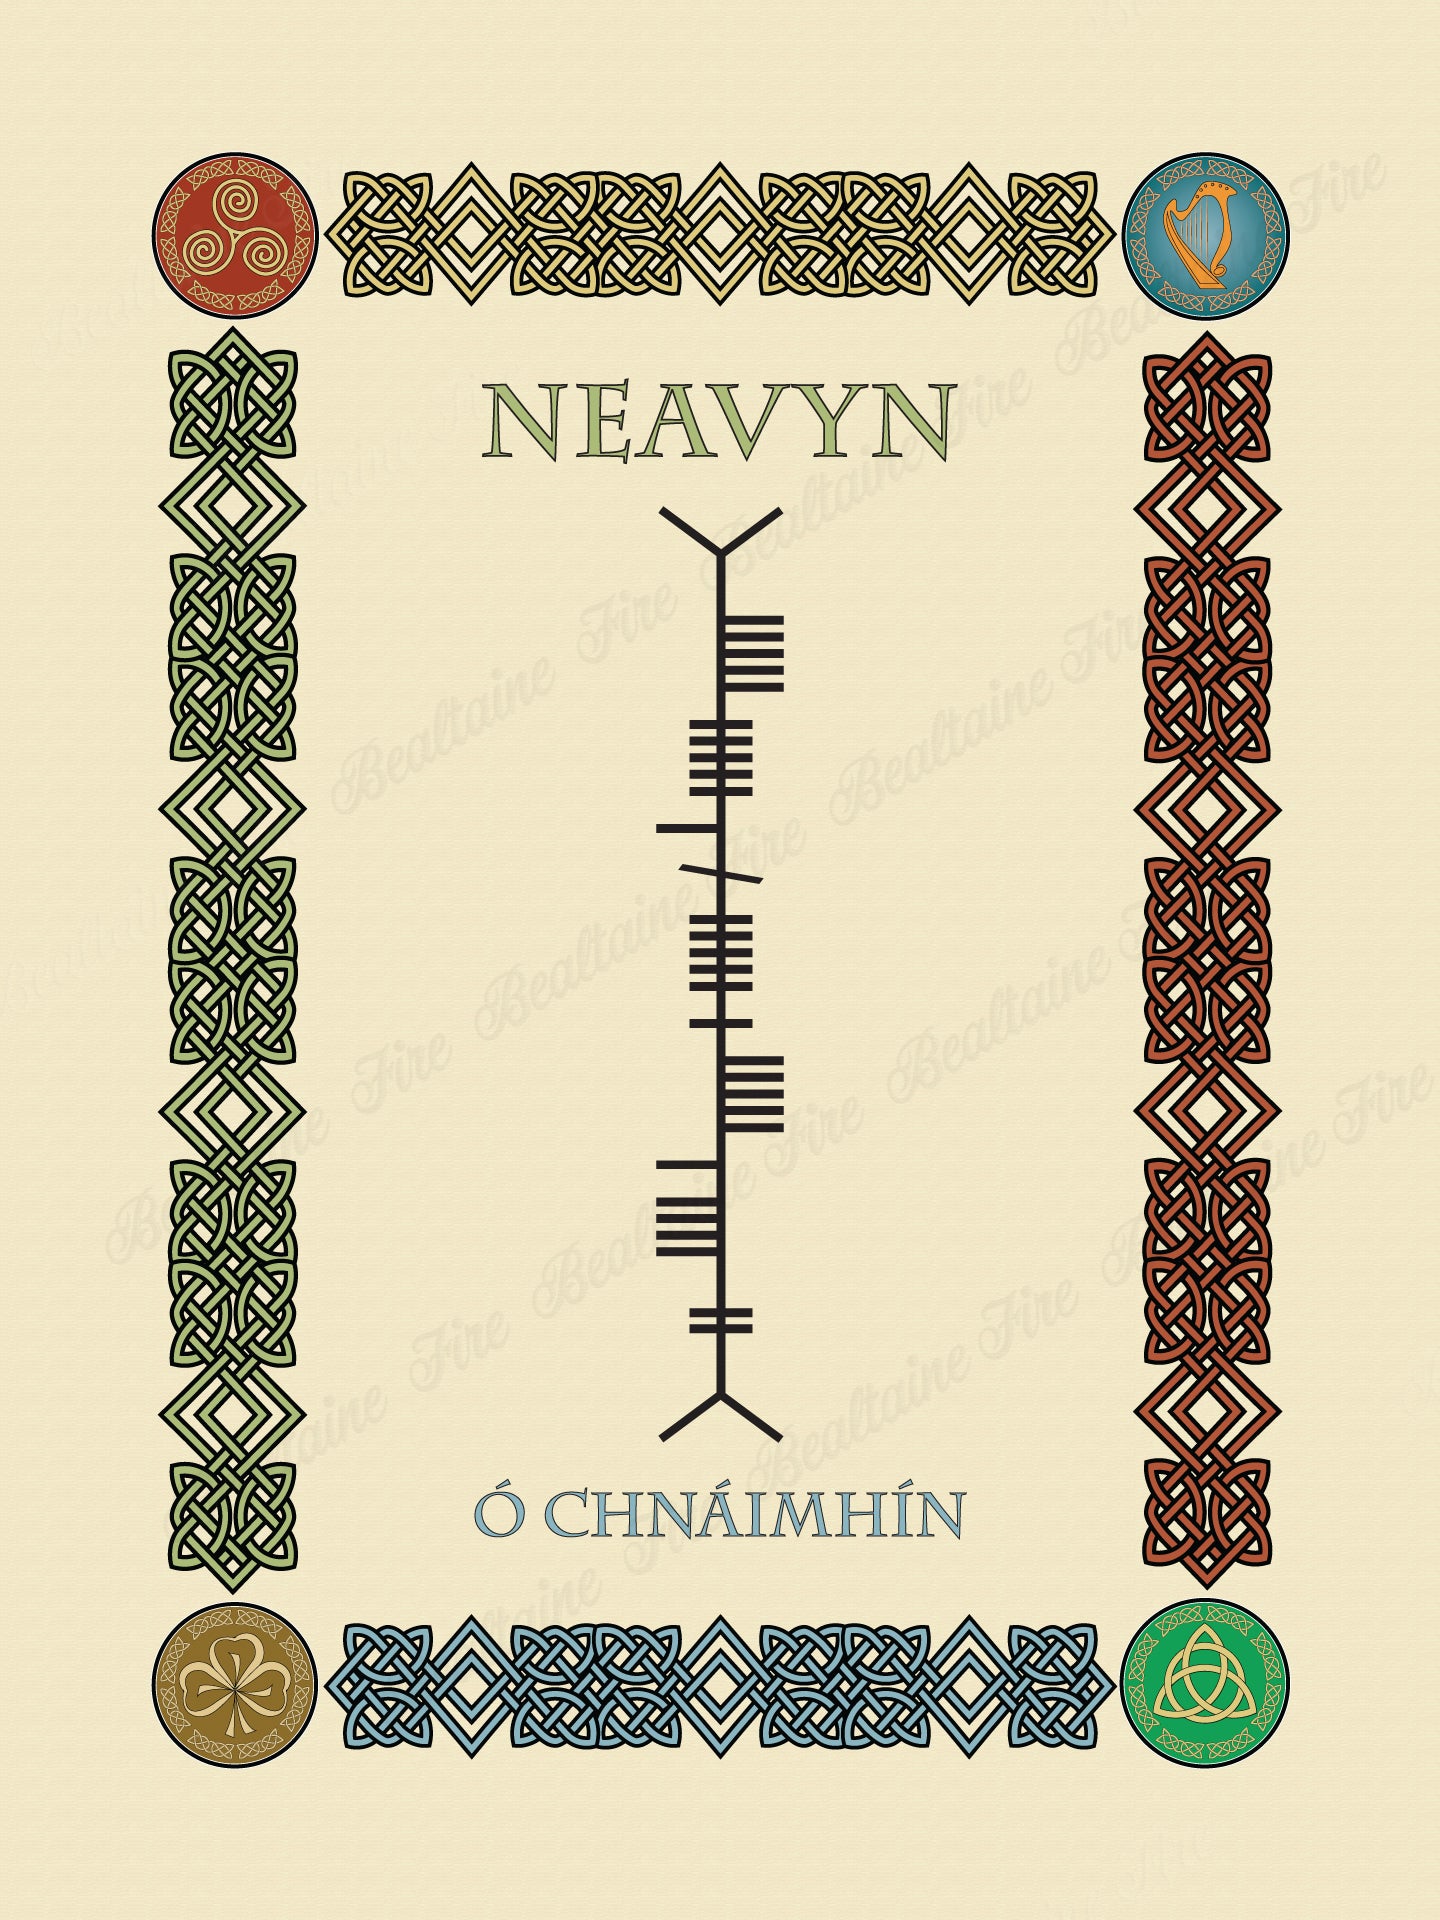 Neavyn (O) in Old Irish and Ogham - Premium luster unframed print